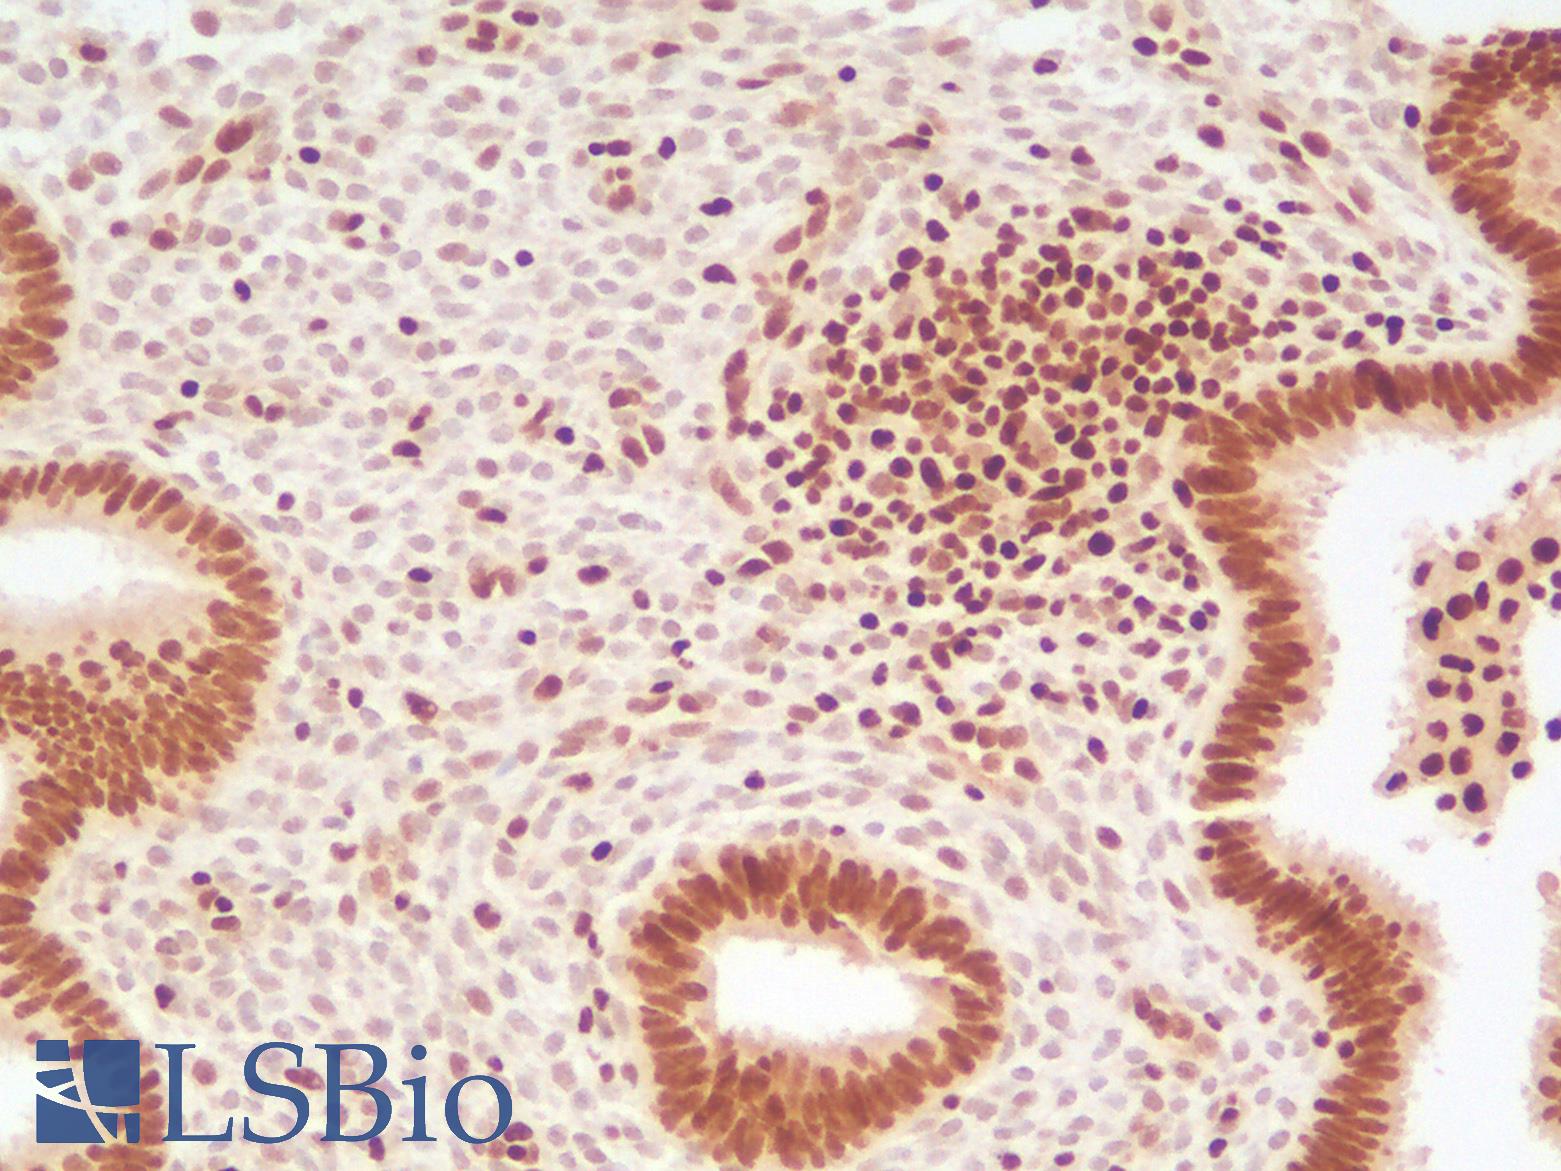 TFE3 Antibody - Human Uterus: Formalin-Fixed, Paraffin-Embedded (FFPE)